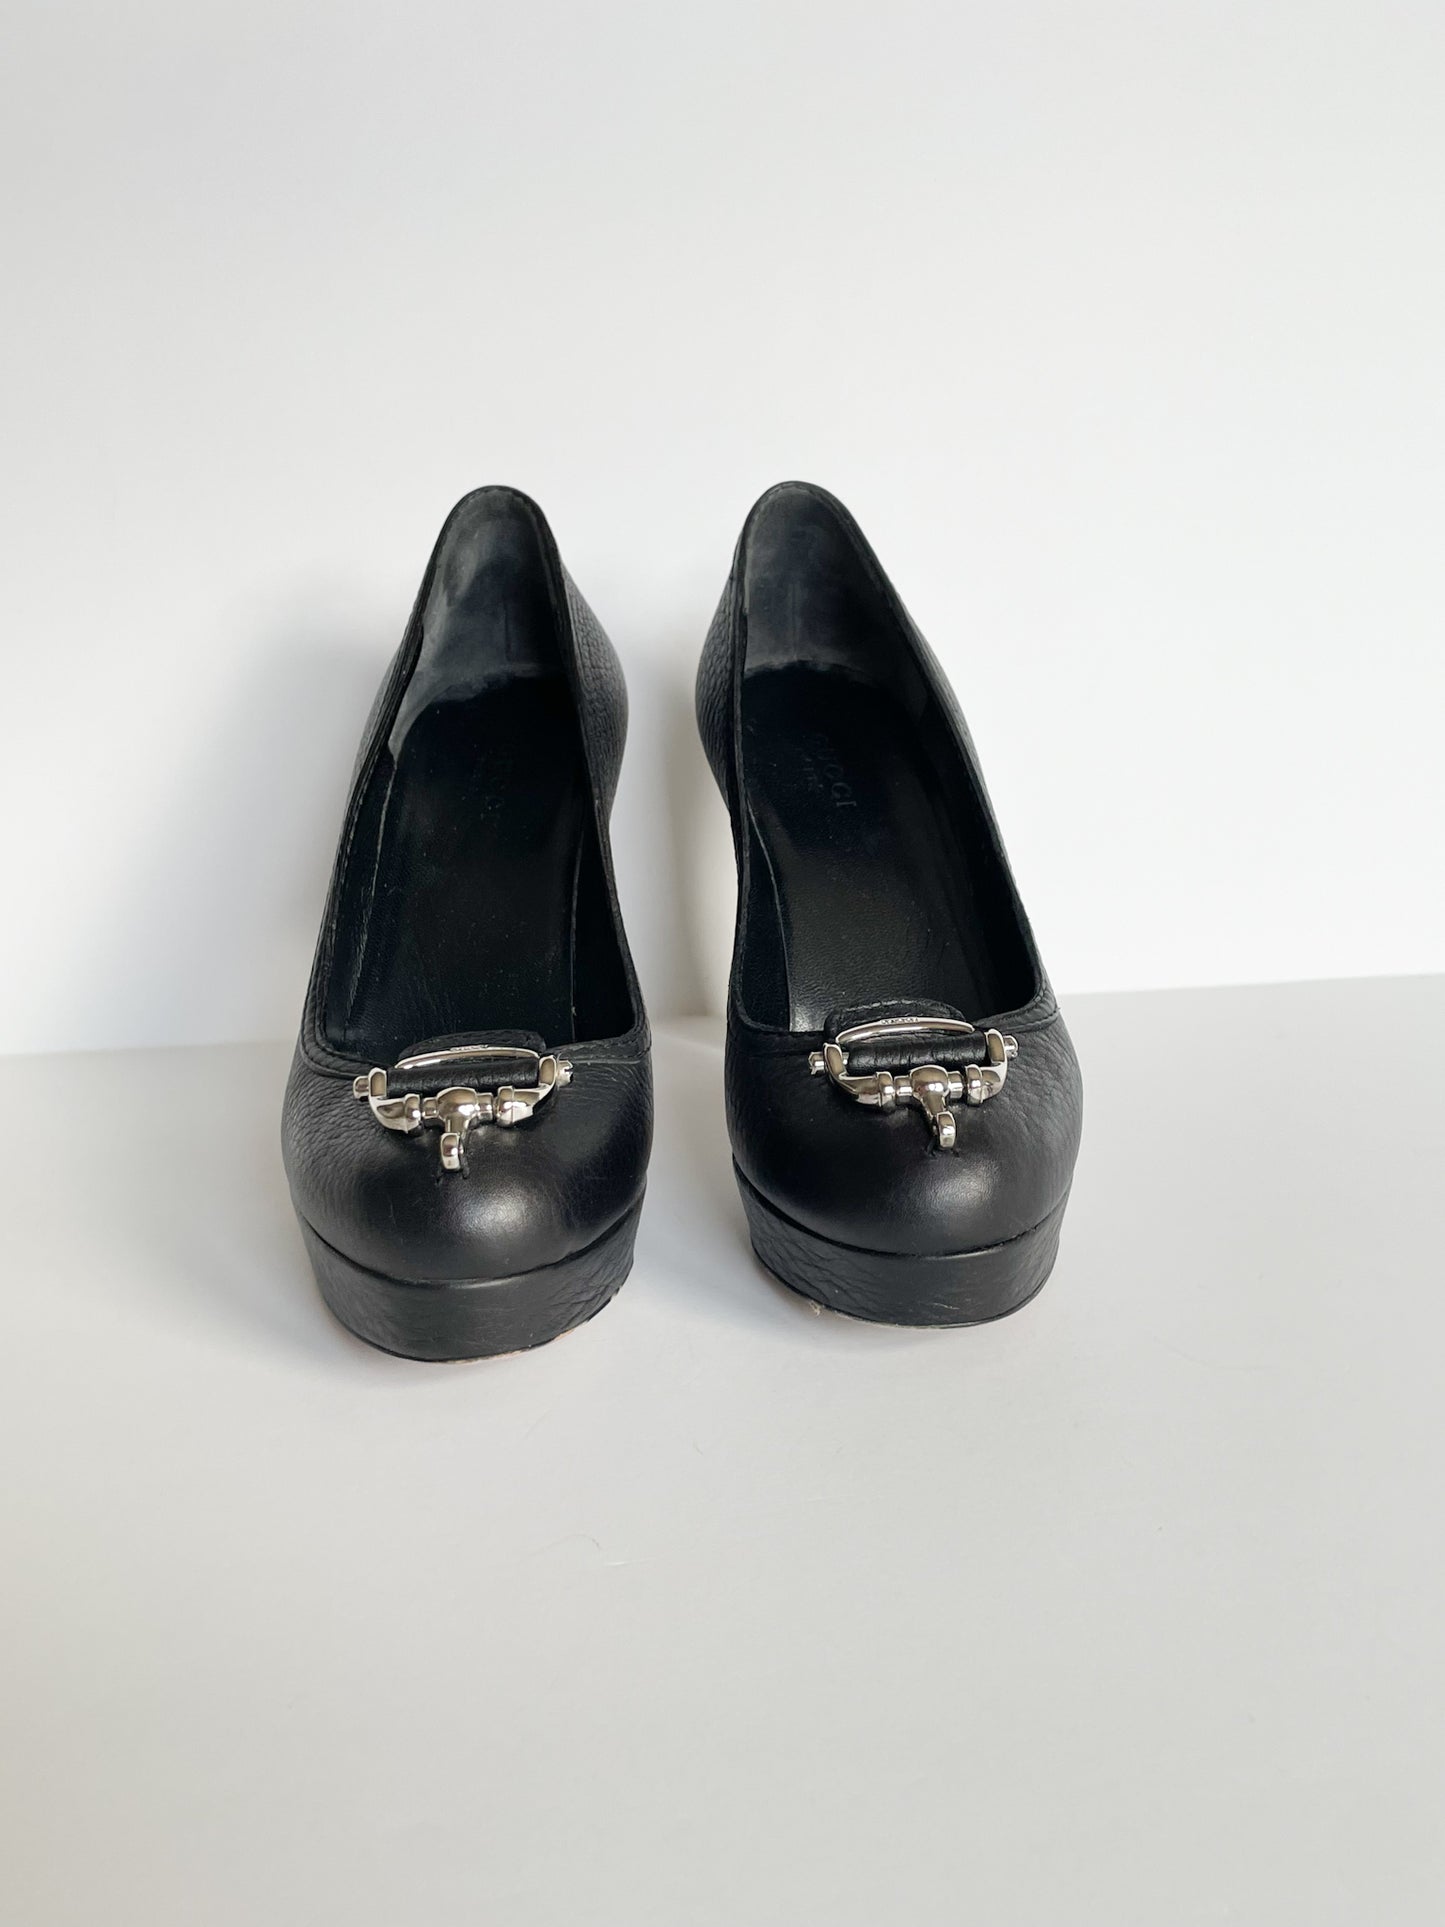 GUCCI Black Genuine Leather Silver Horsebit 3.75" Heels - Size 35